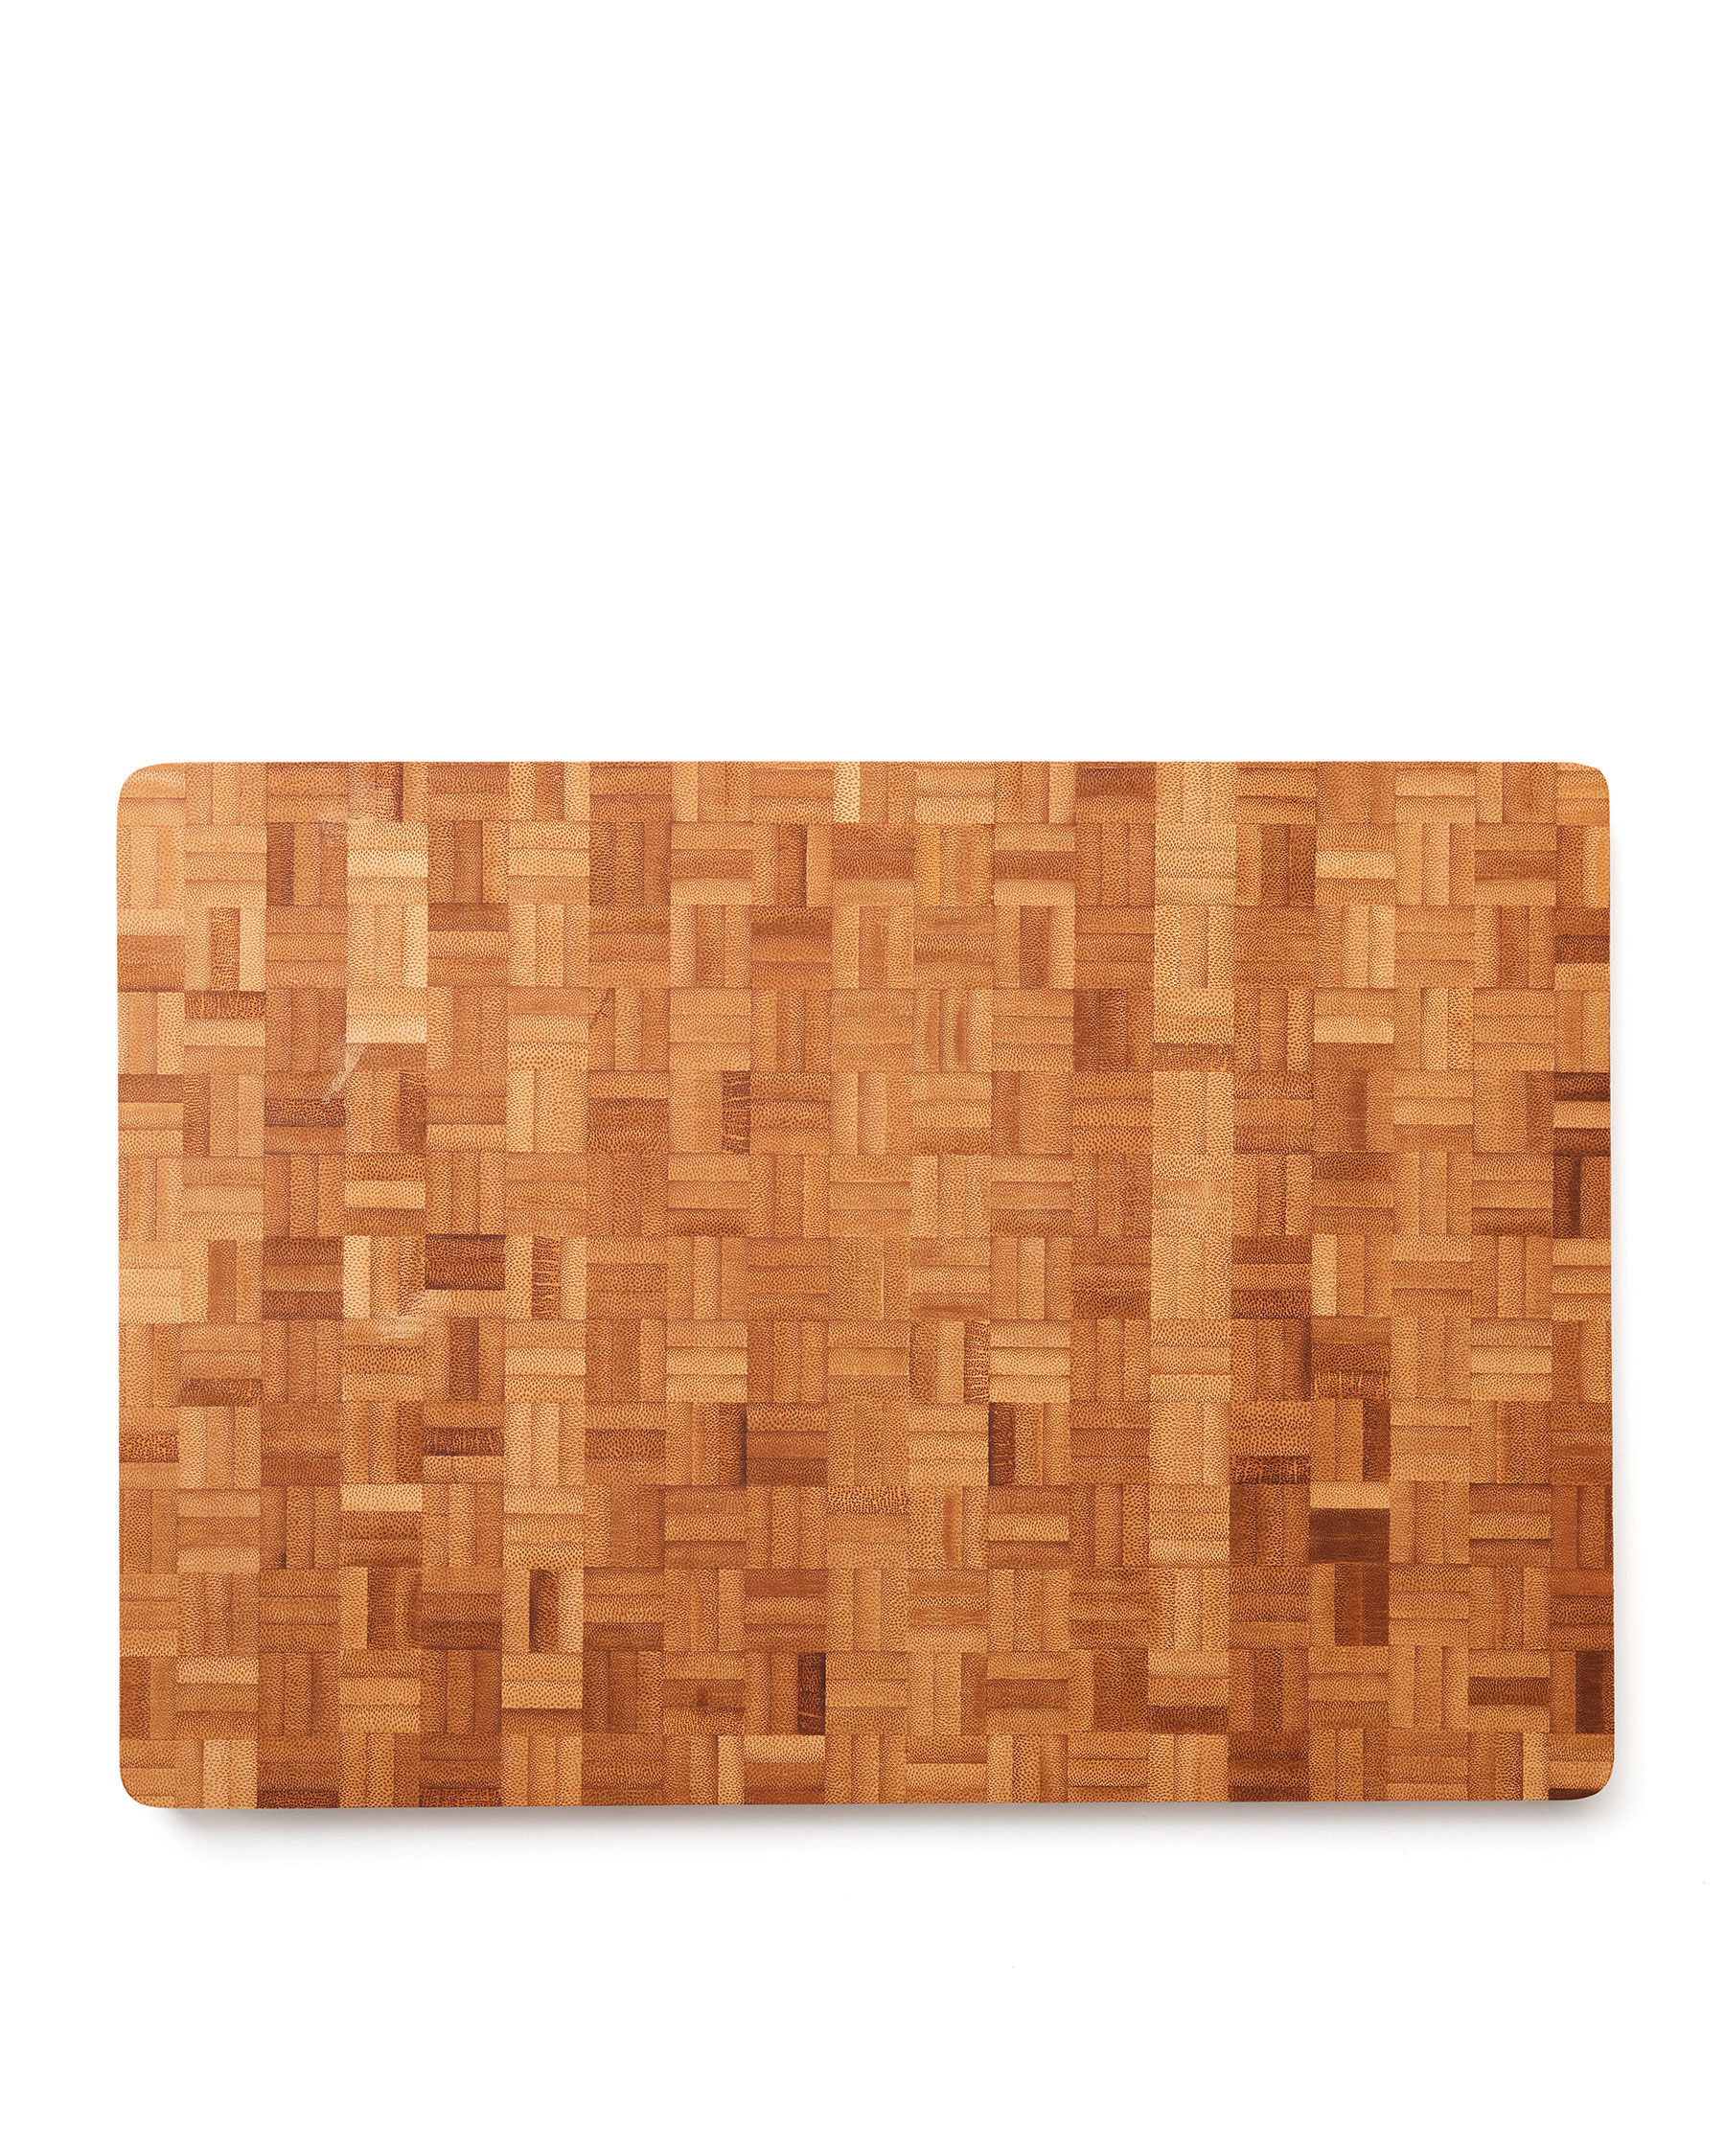 Logotrade Deluca end grain cutting board Brown